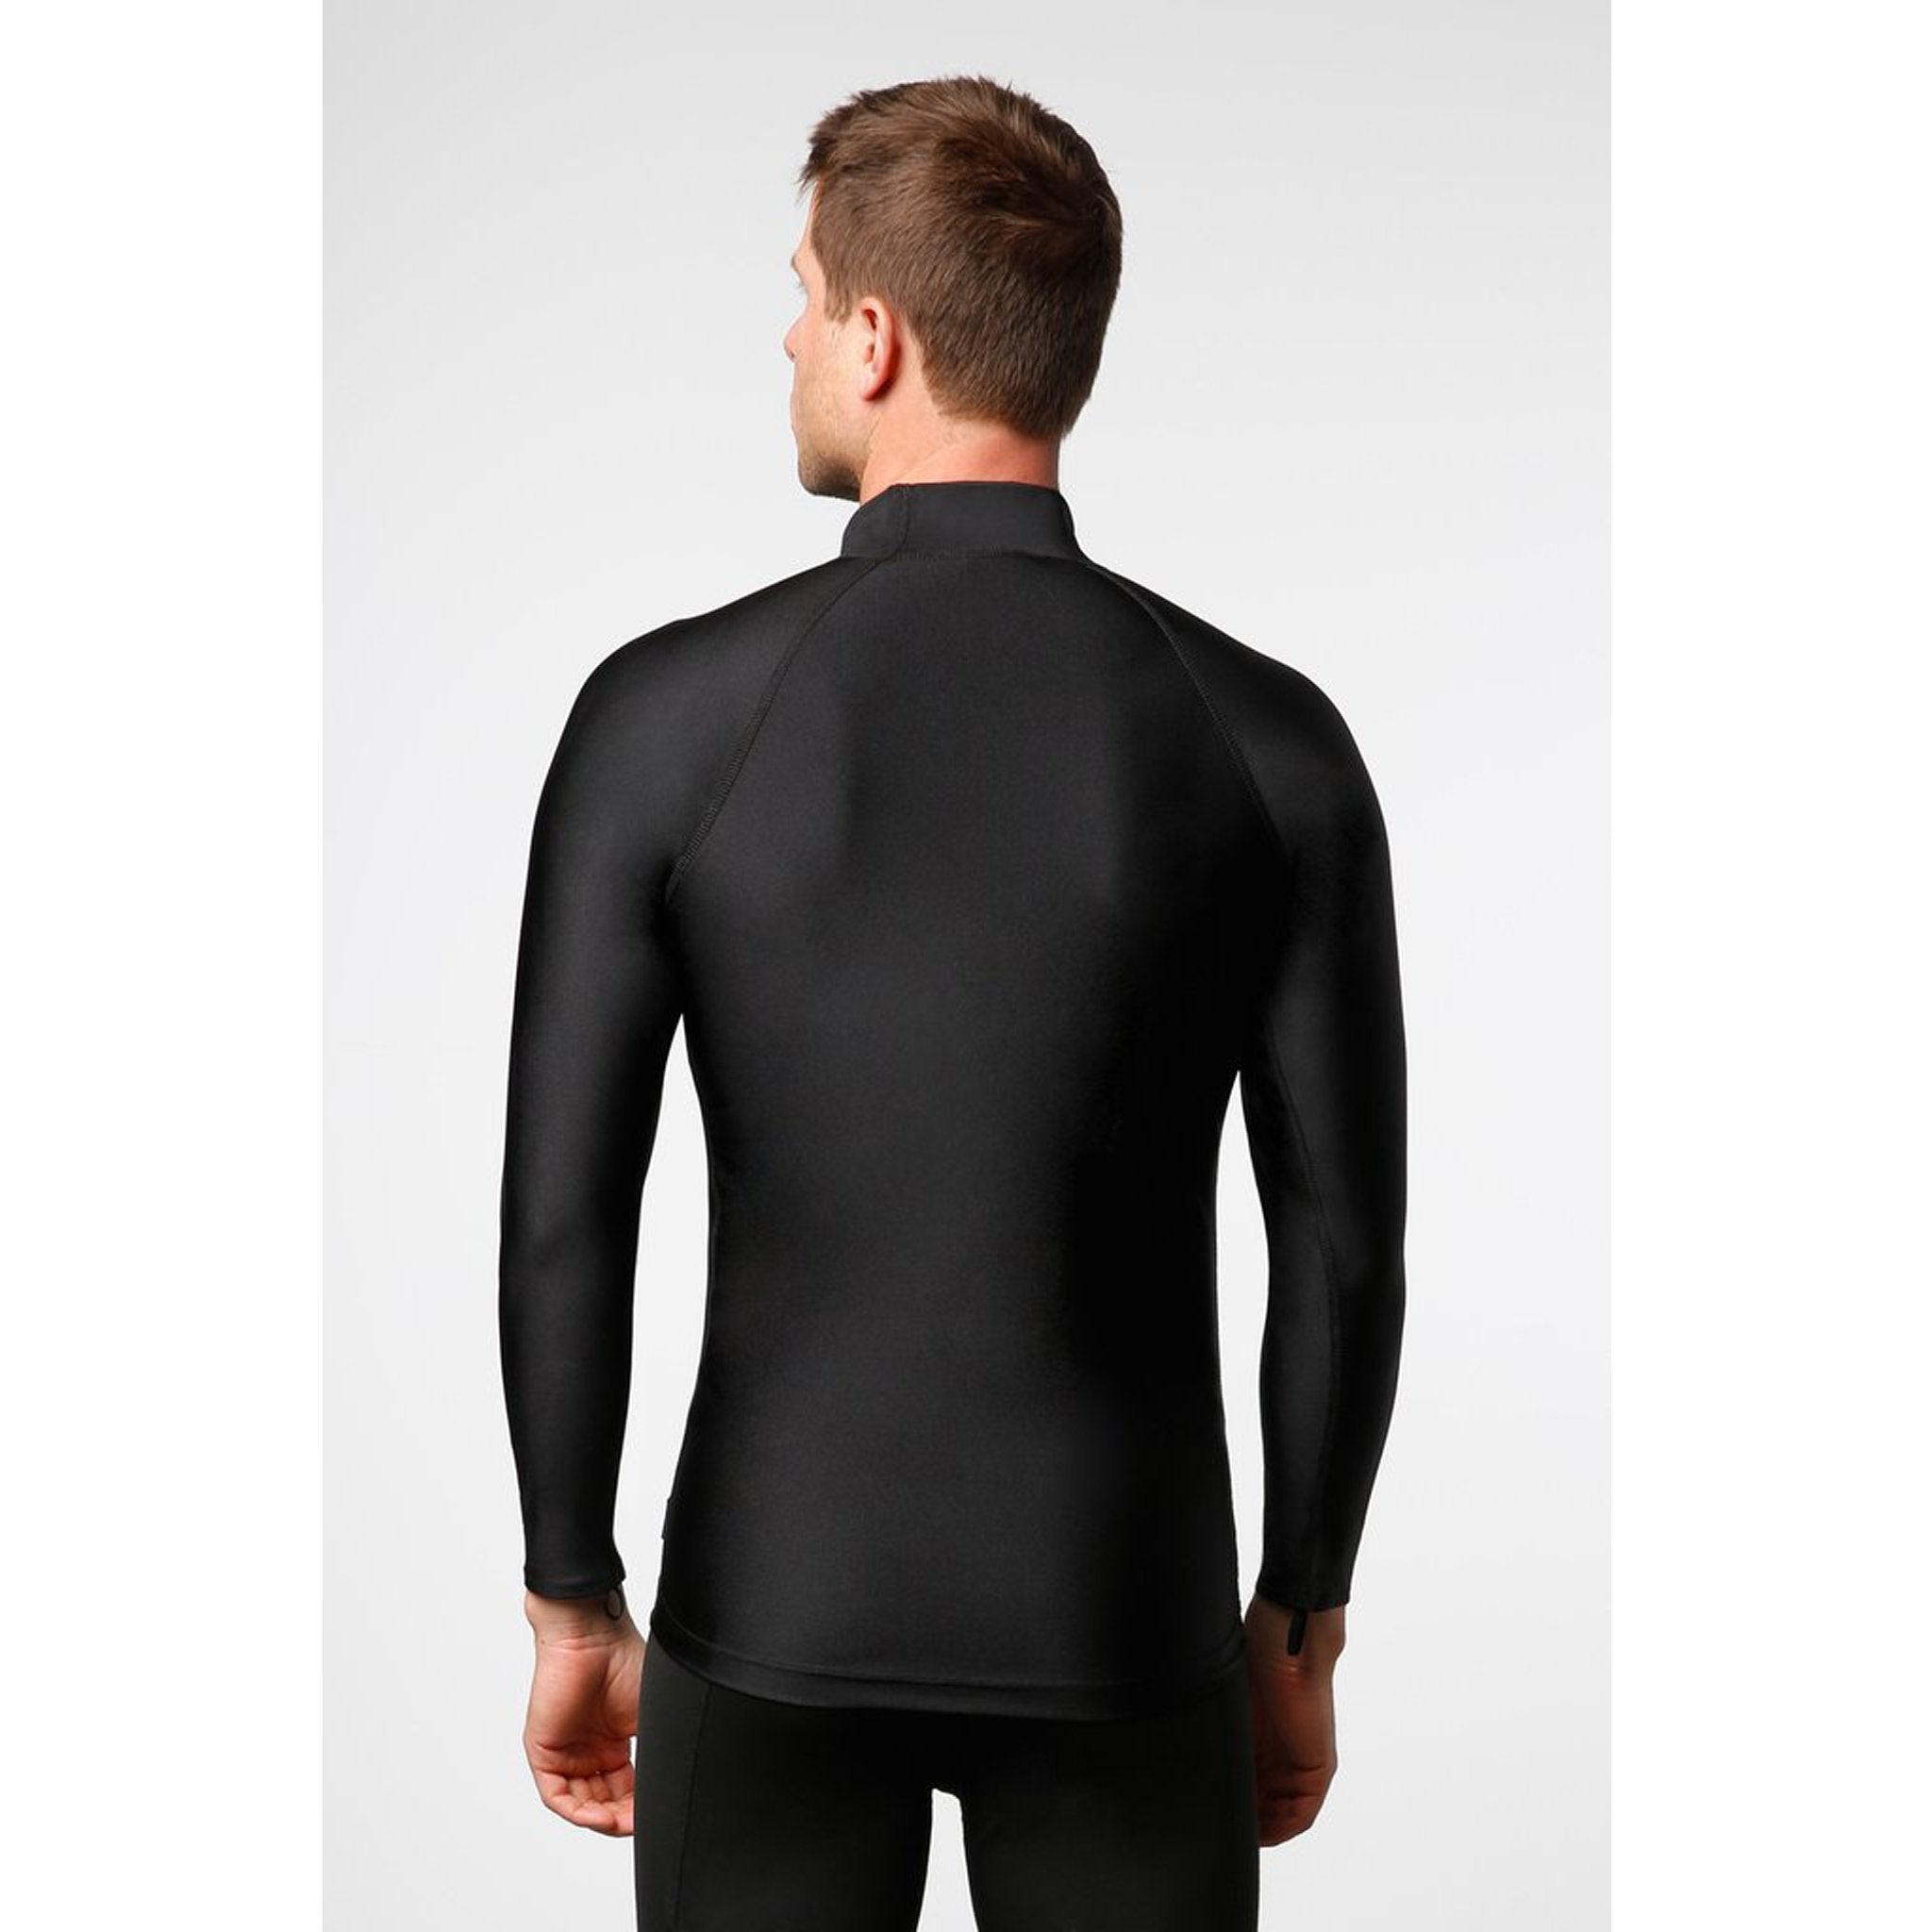 P356 Raglan Long Sleeve Vest With Fuzzy Collar & Front Zip (Unisex)-Top-wetsuit, diver, sharkskin, snorkeling gear, watersports equipment, diving fins, snorkeling mask, ocean reef, Garmin G1